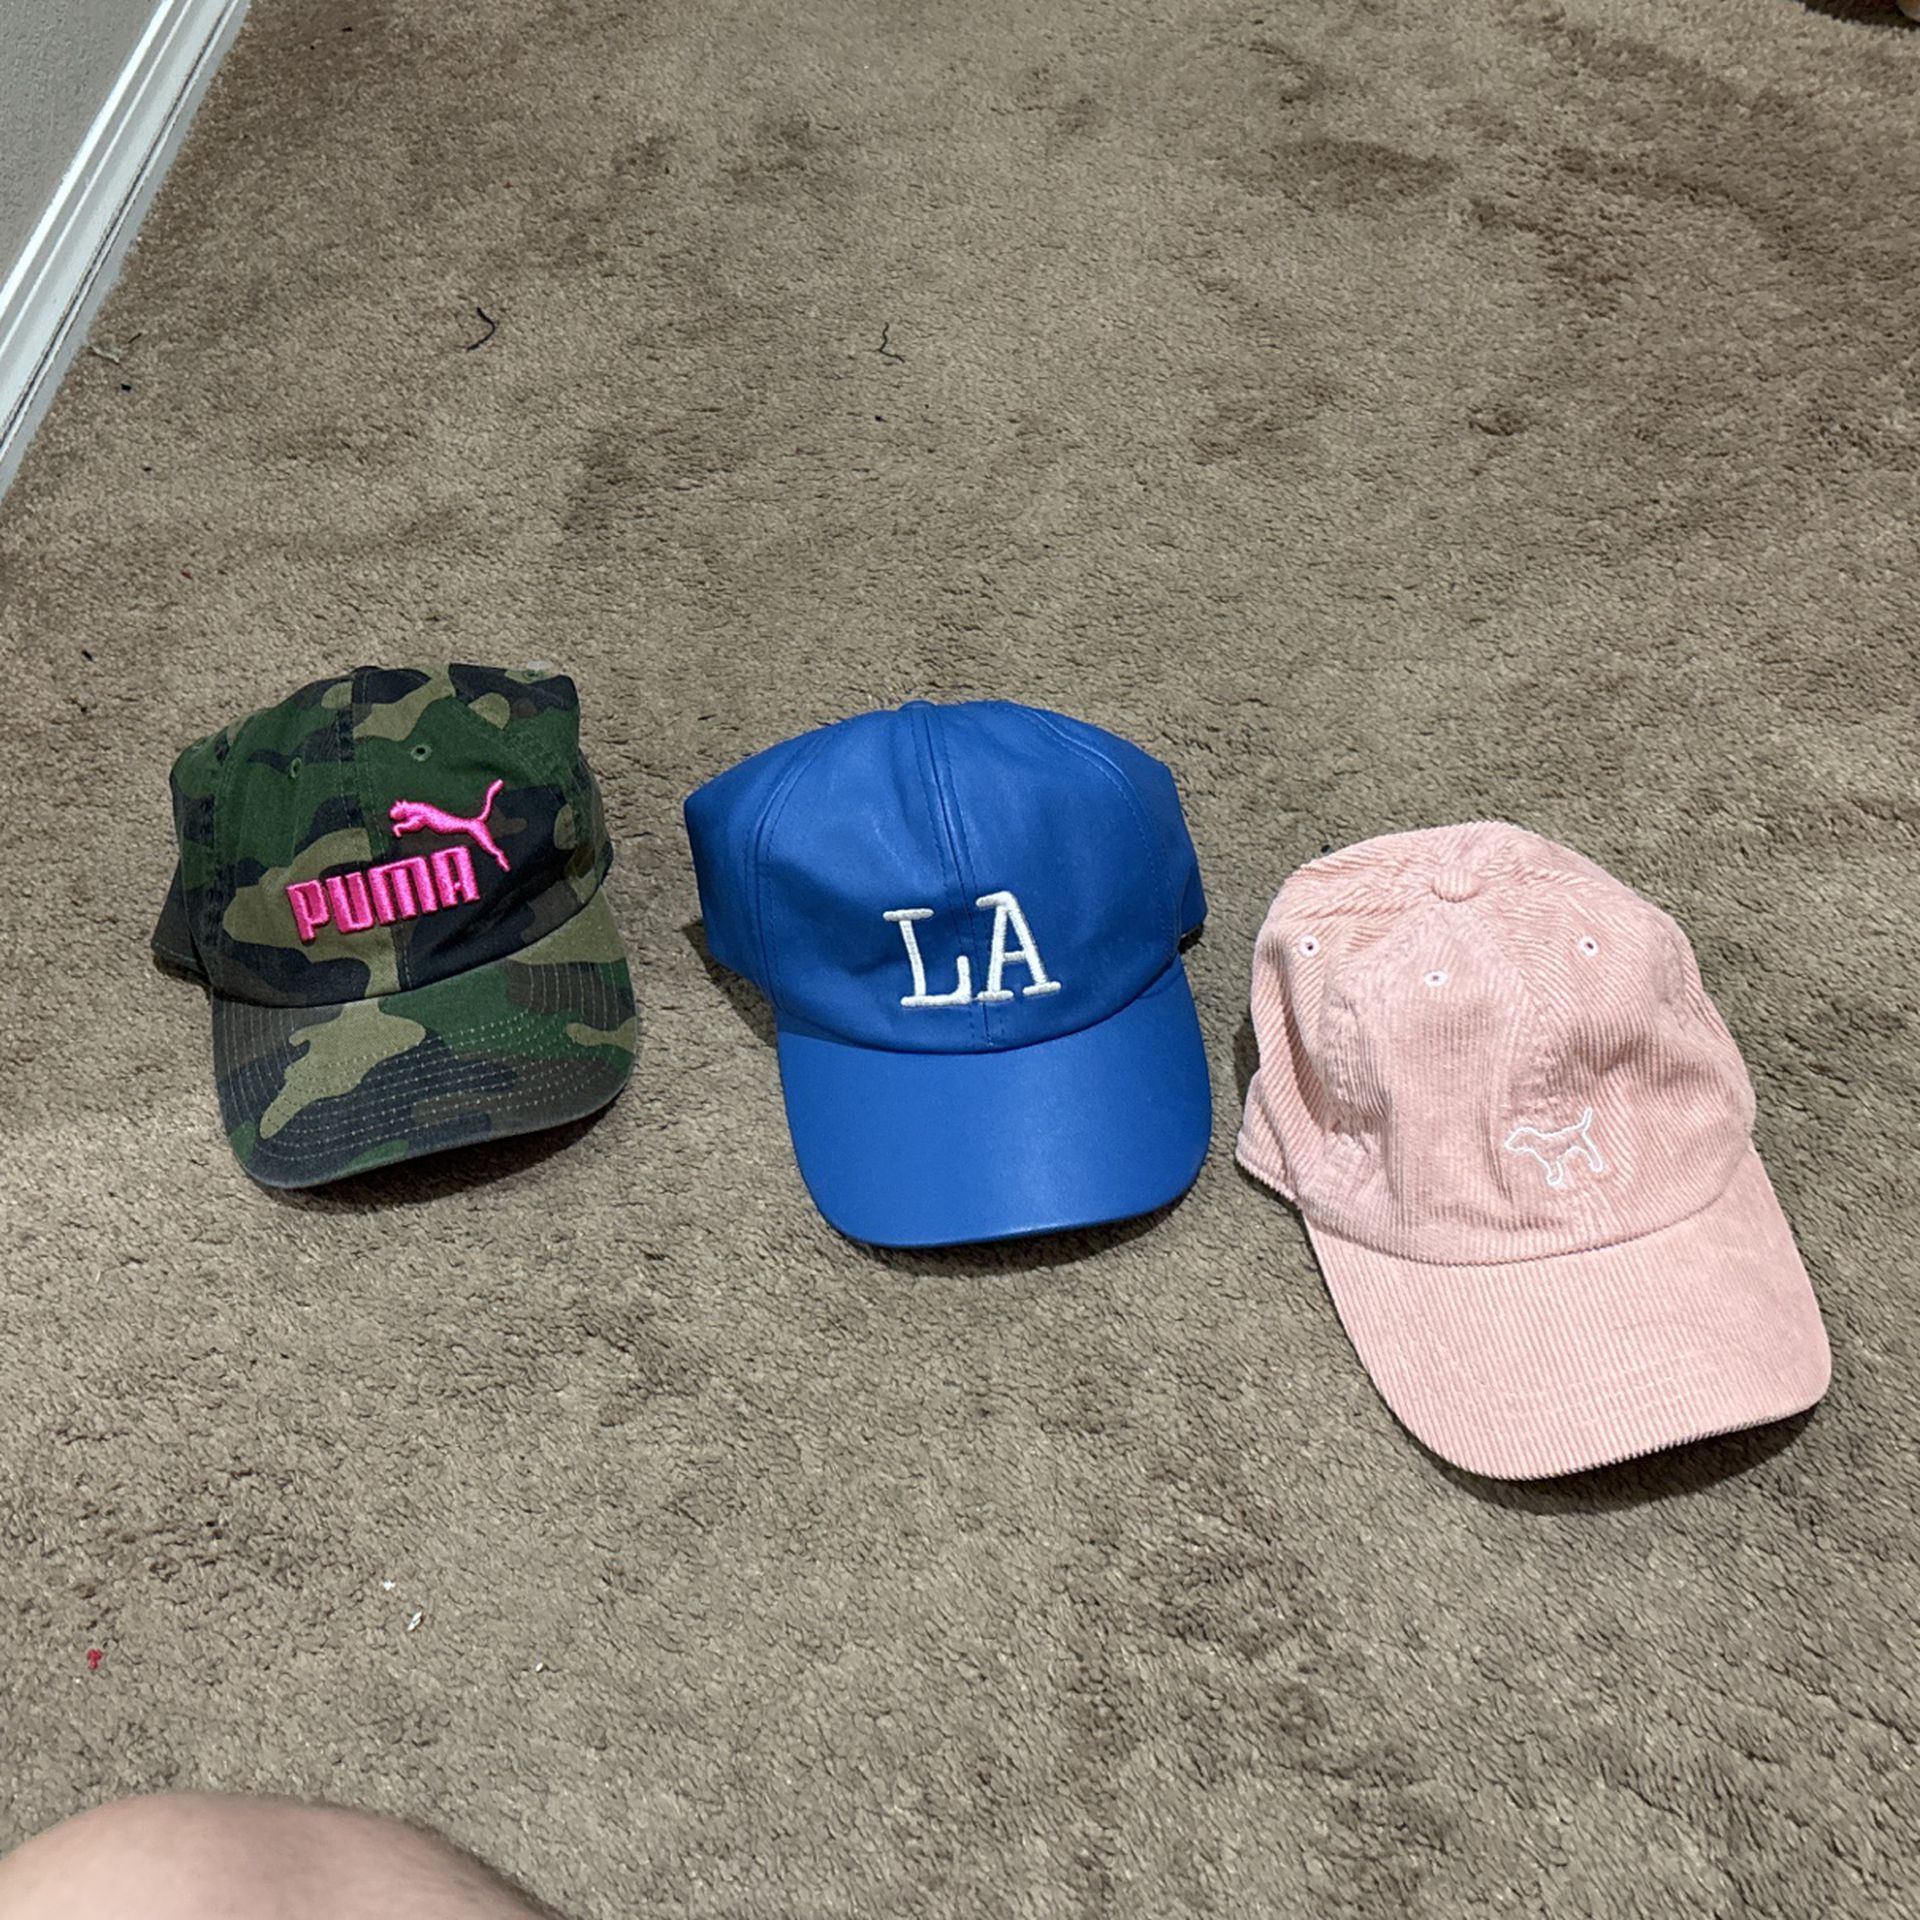 Puma, LA, & Pink Brand Hat